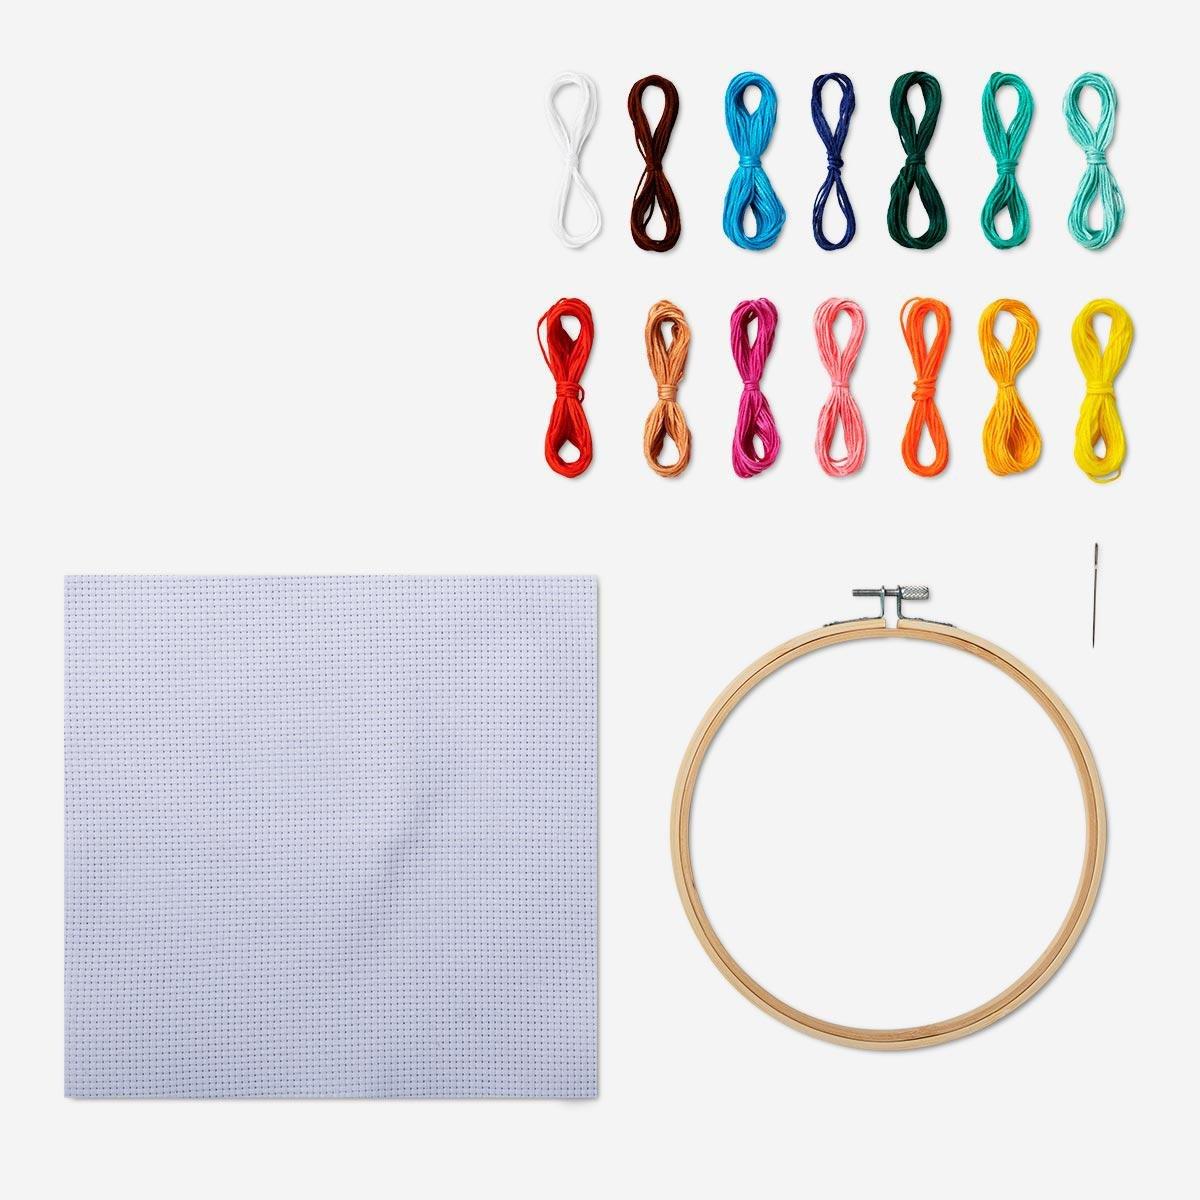 Multicolour cross stitch kit